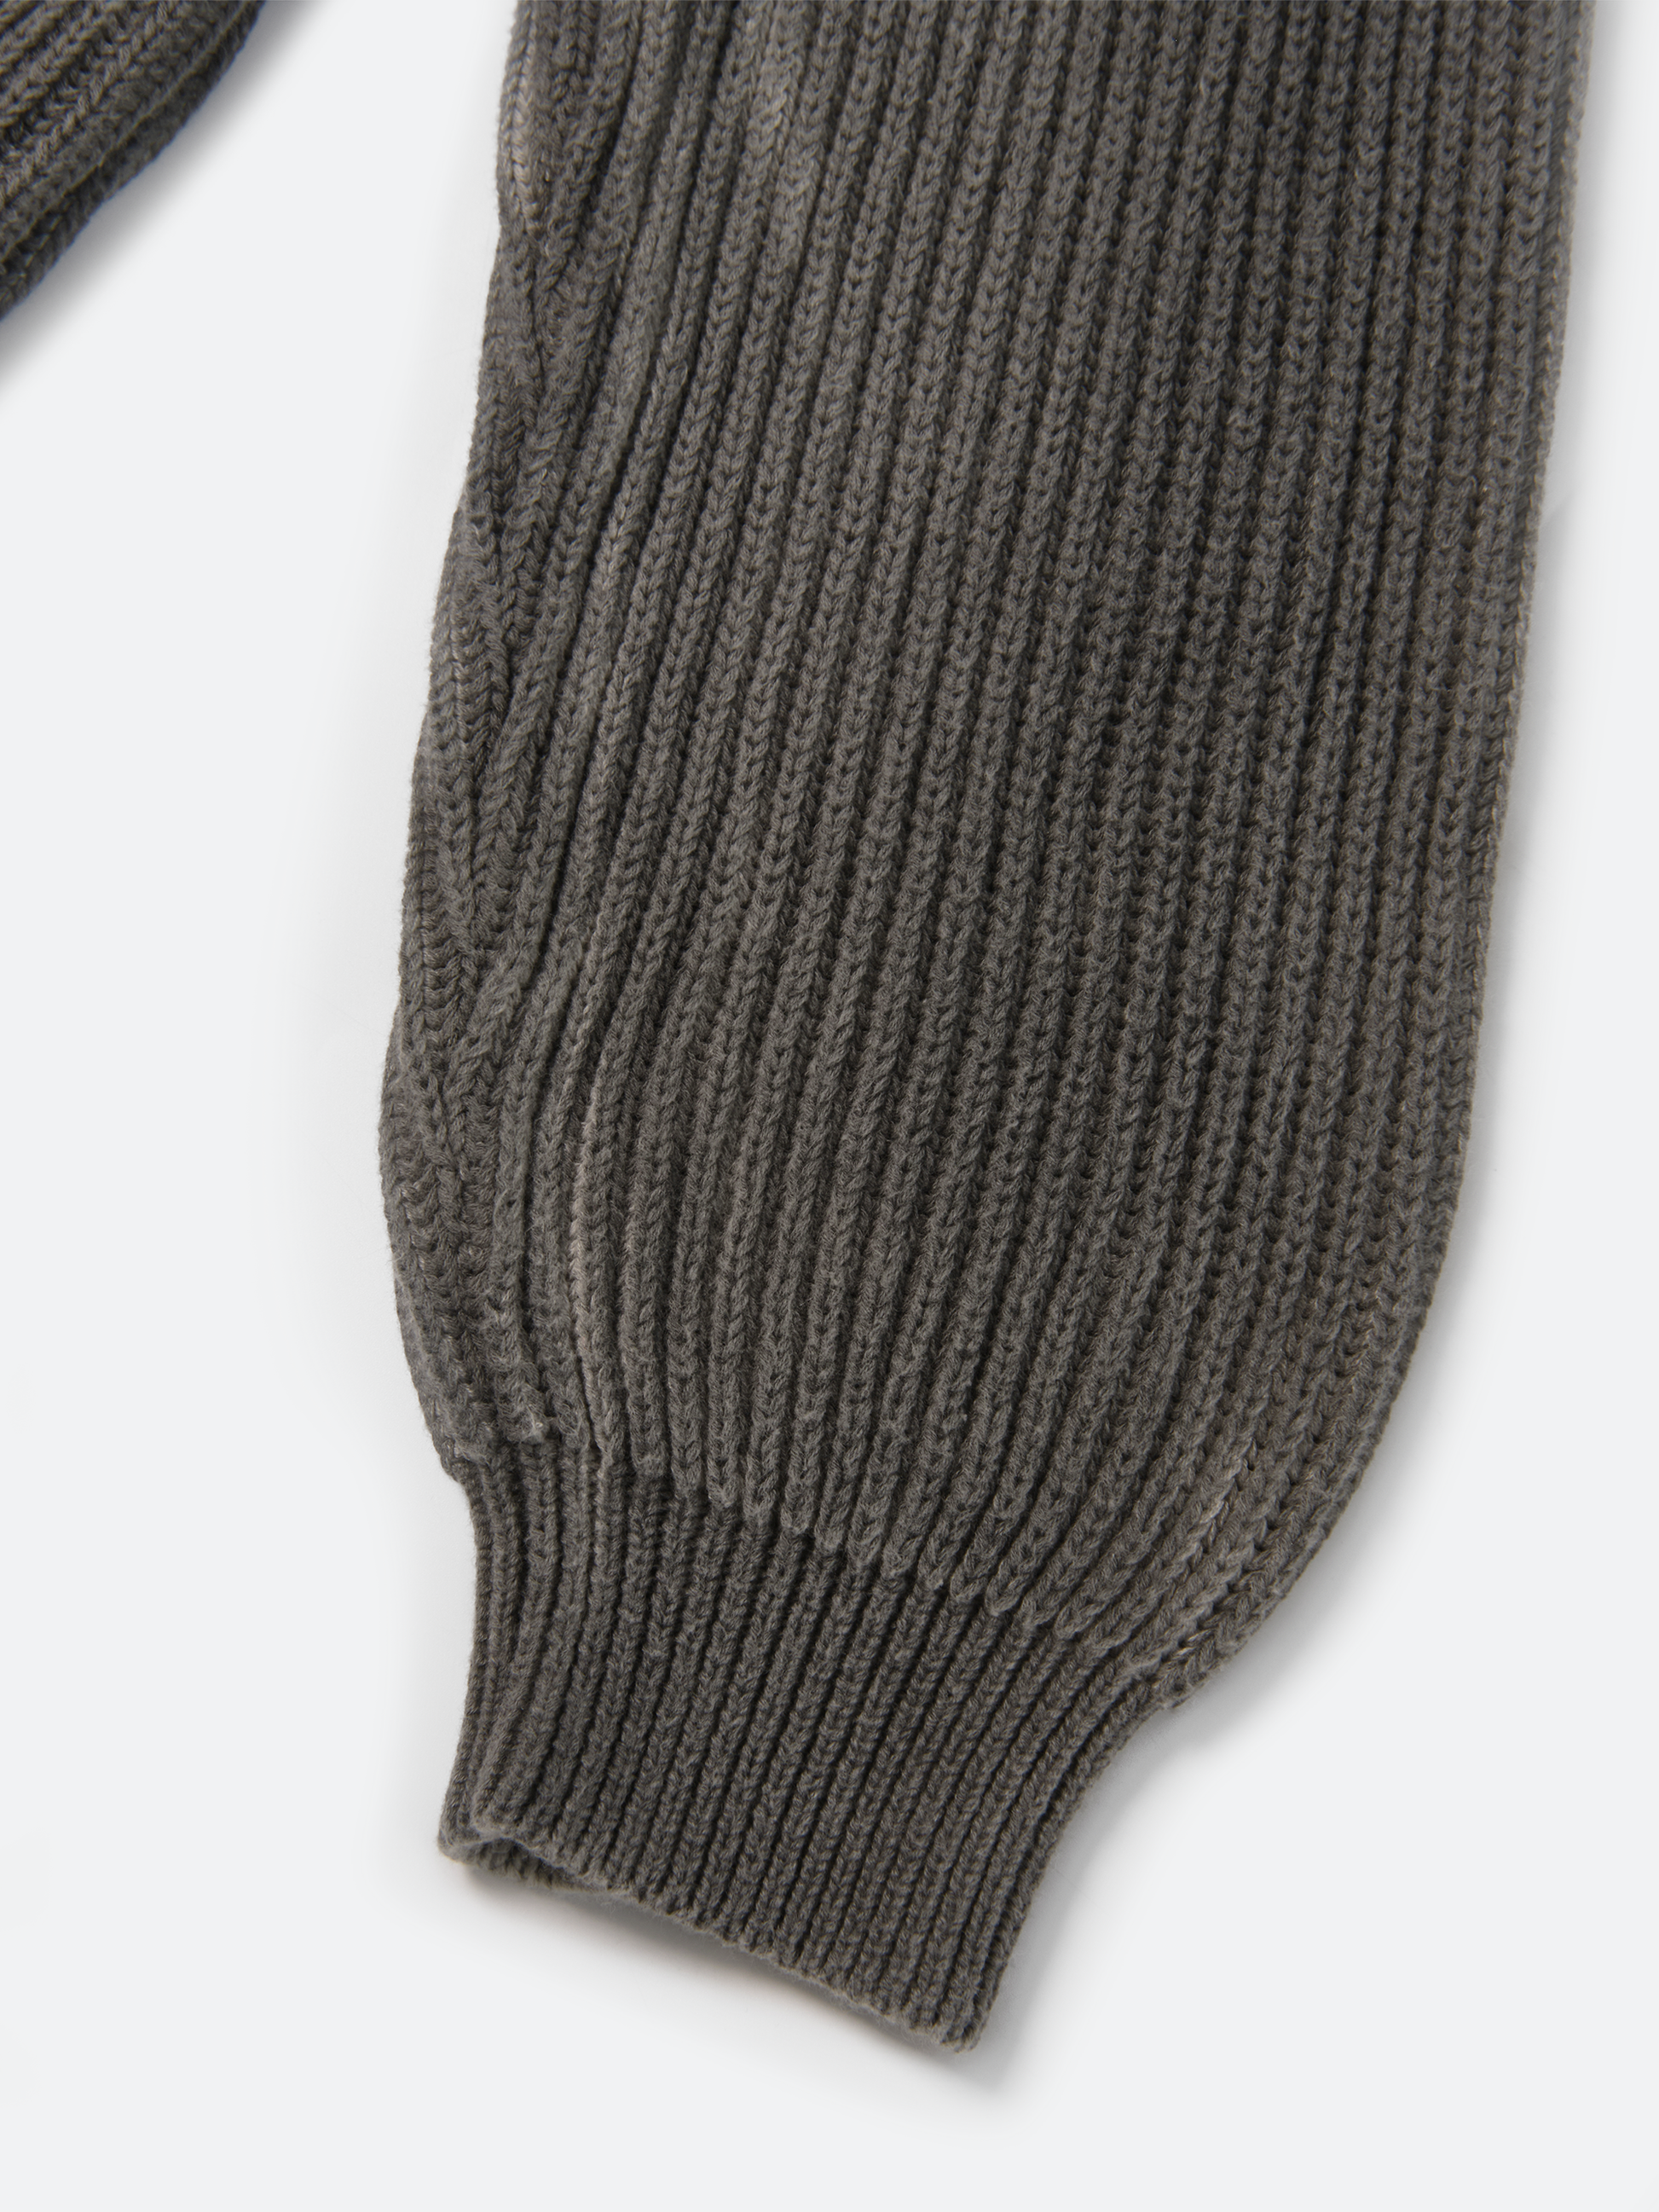 dark-dyed-knit-sweater-FRAGILE-CLUB-astoud